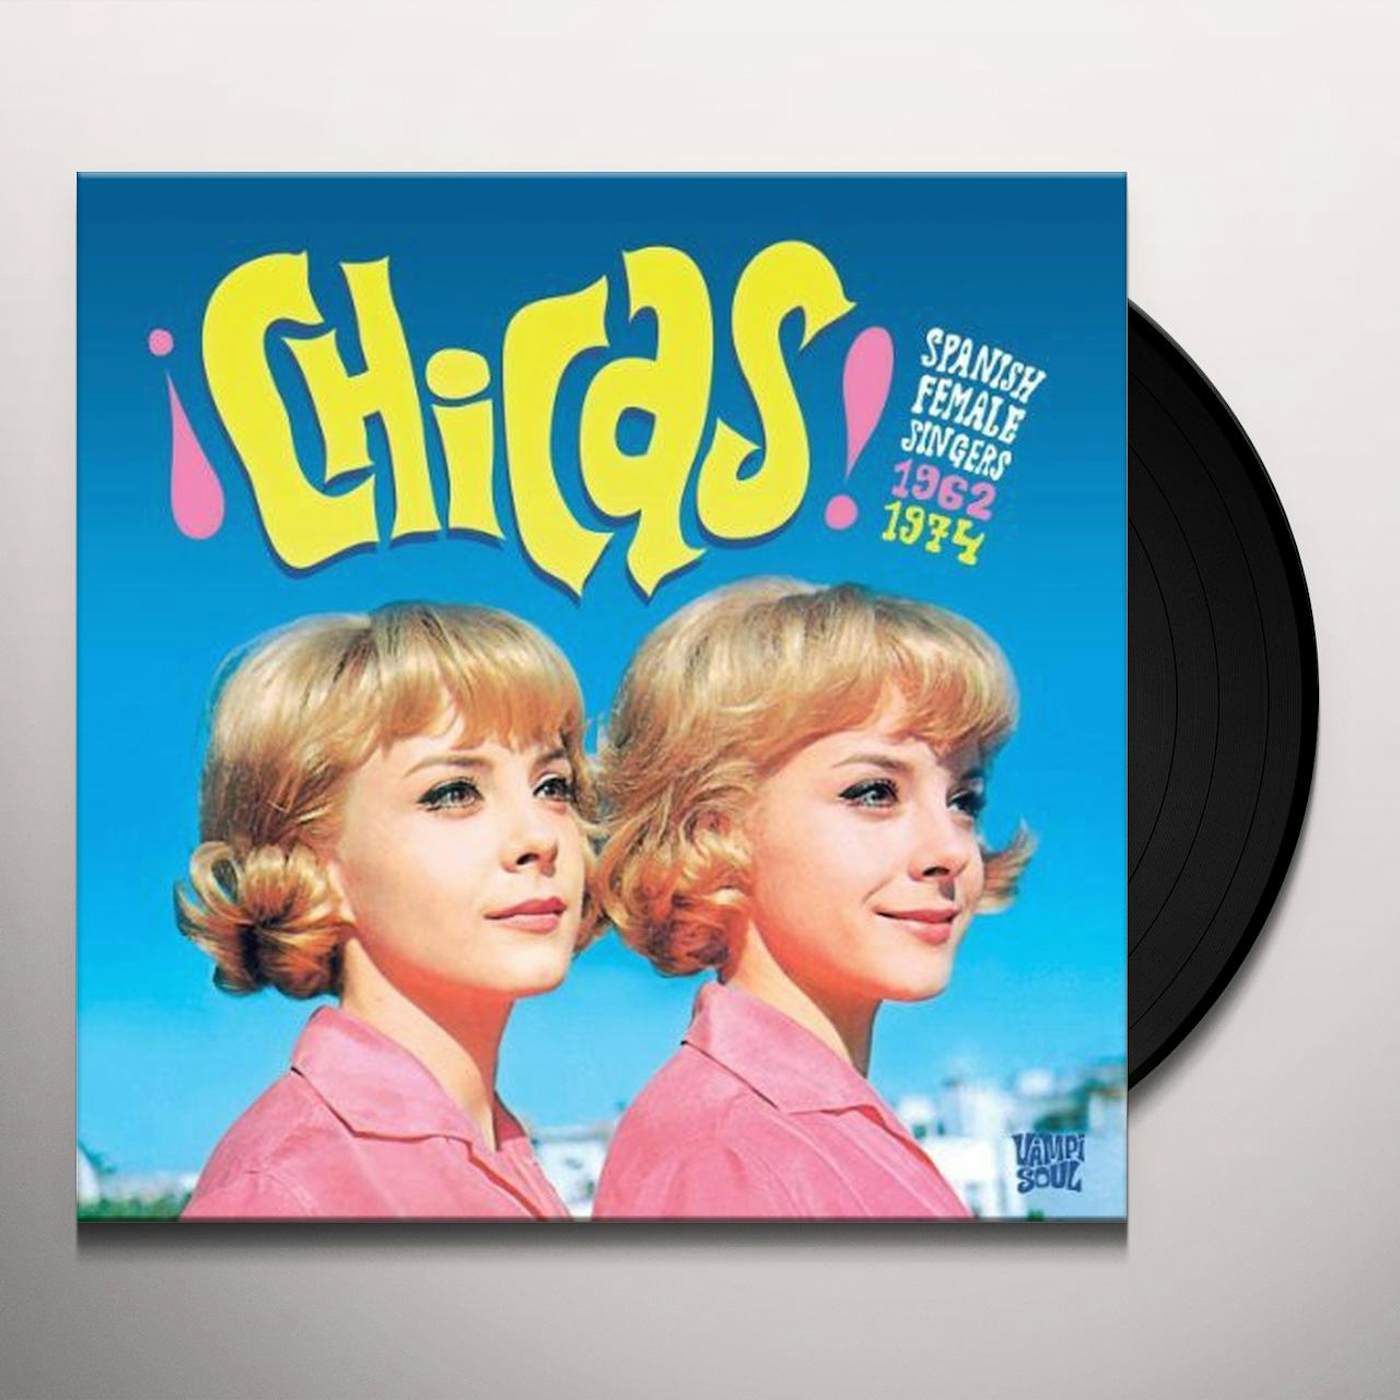 Chicas: Spanish Female Singers 1962-1974 / Various